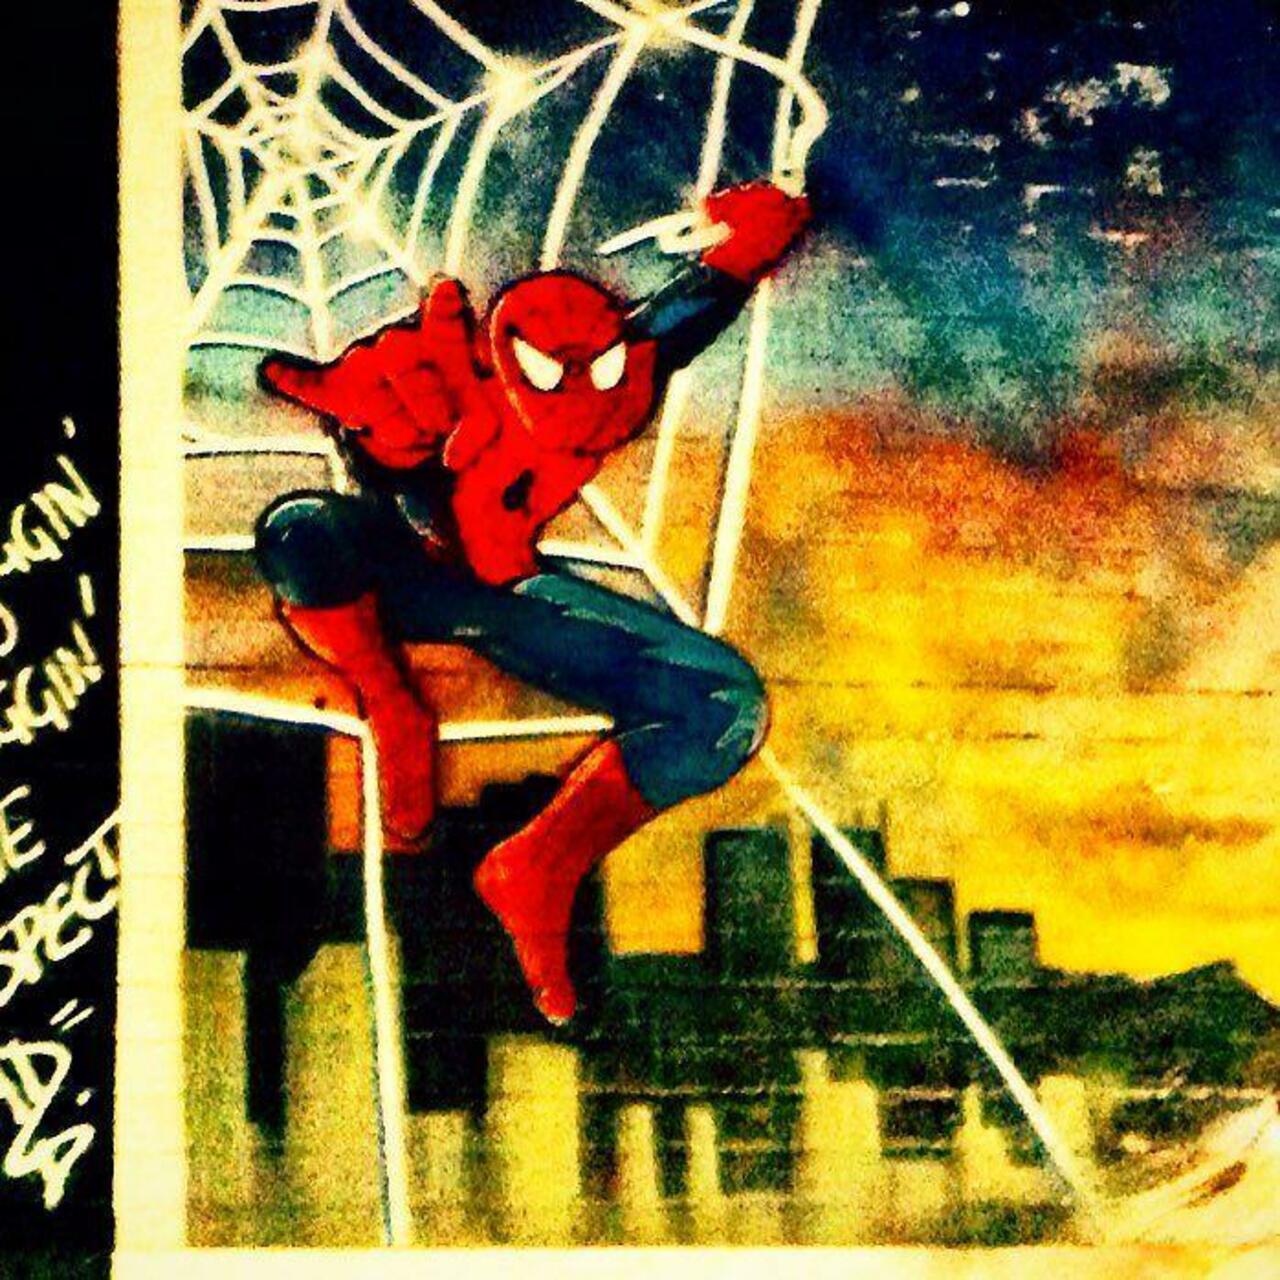 #pad303 #spiderman #streetart #southbank #london #streetphotography #art #arteurbana #urban #urbanart #graffiti #st… http://t.co/PIS7OMO9Ig